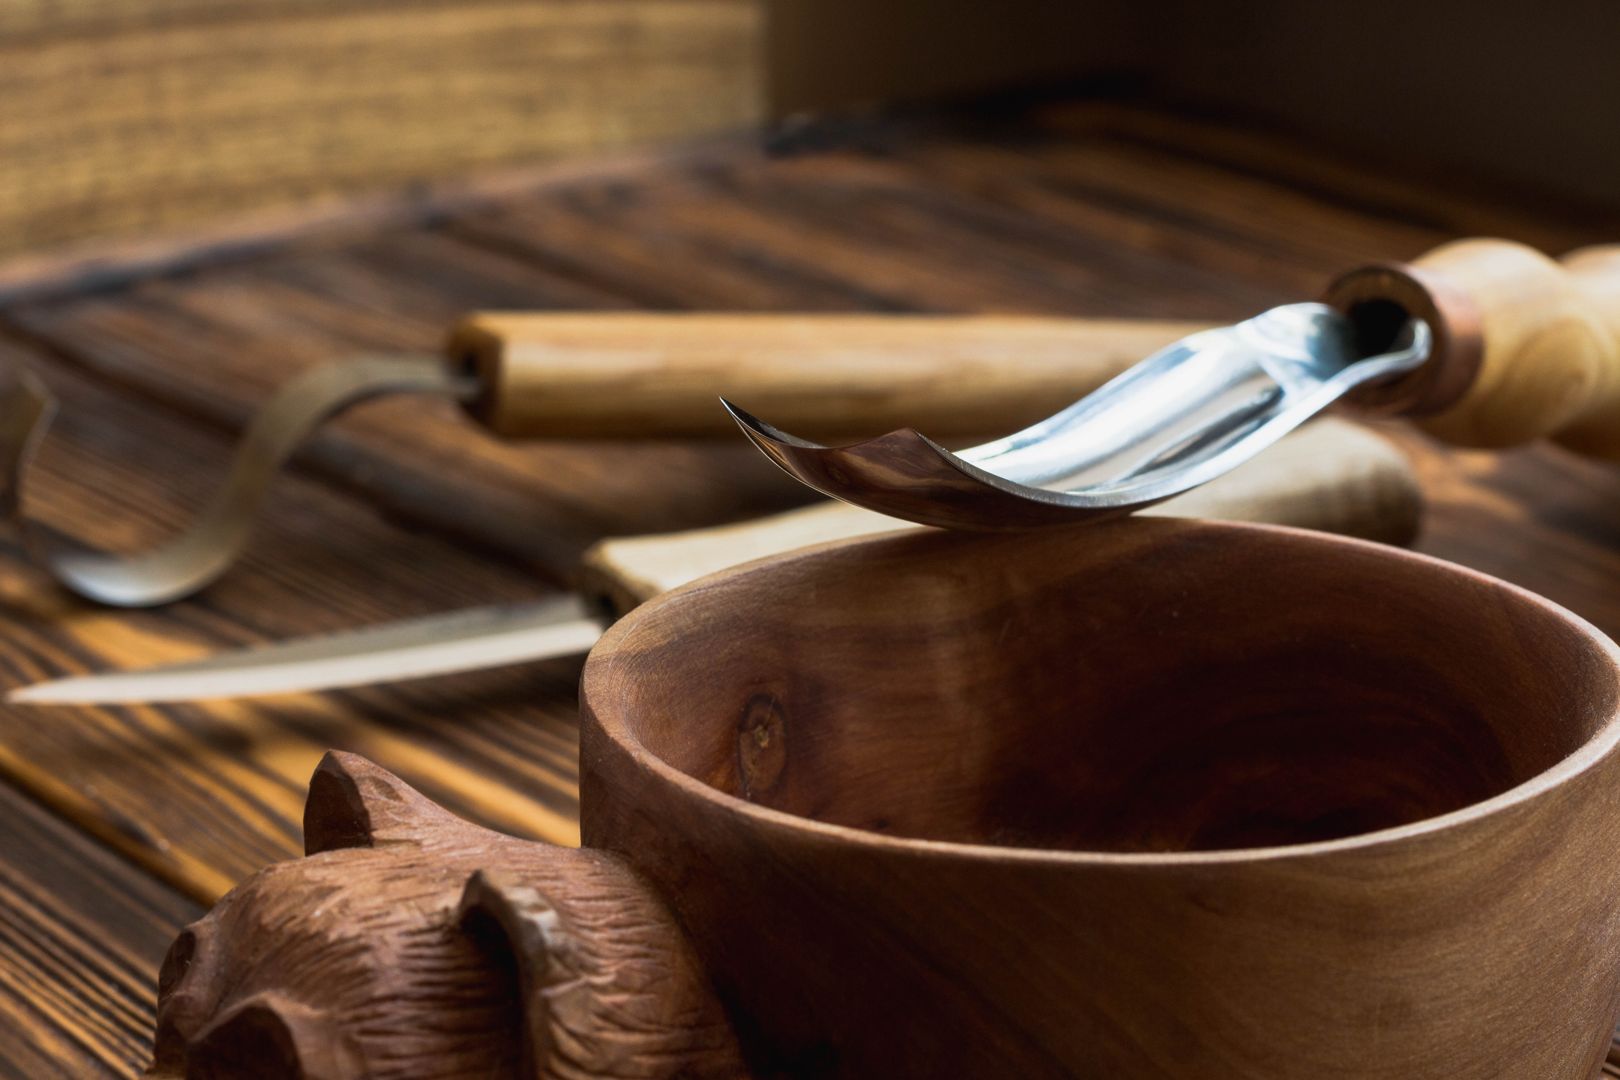 BeaverCraft Wood Spoon Carving Tools Kit S14x Deluxe - Spoon Carving Knives  Hook Knife Wood Carving Spoon Knife Set Bowl Kuksa Whittling Carving Gouges  Kit 